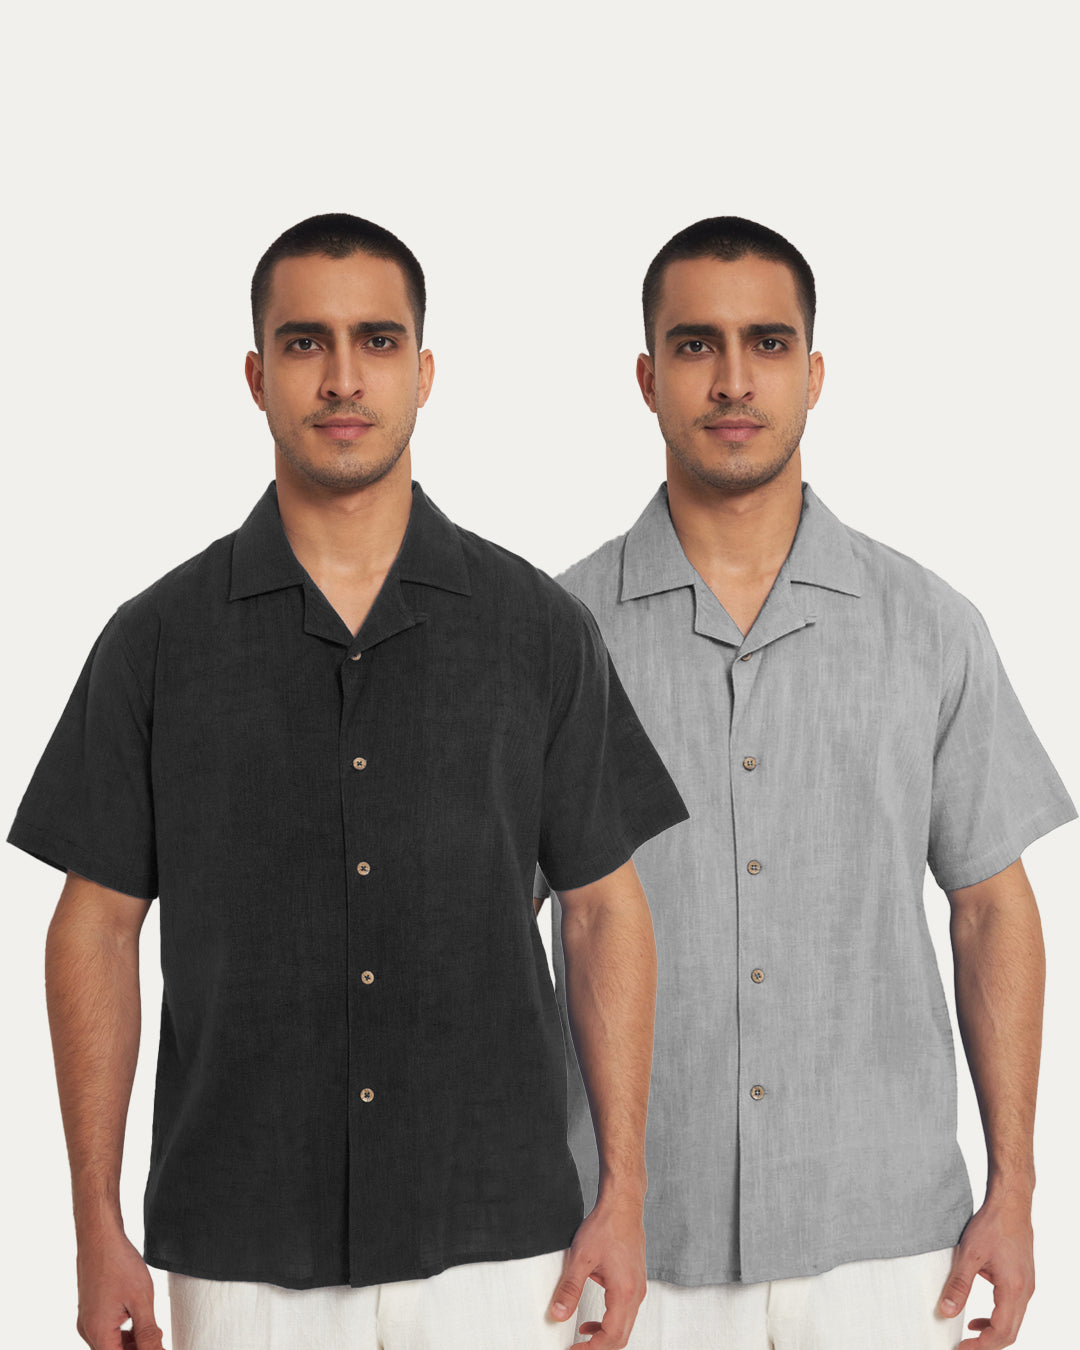 Combo : Classic Grey & Black Men's Half Sleeves Shirt